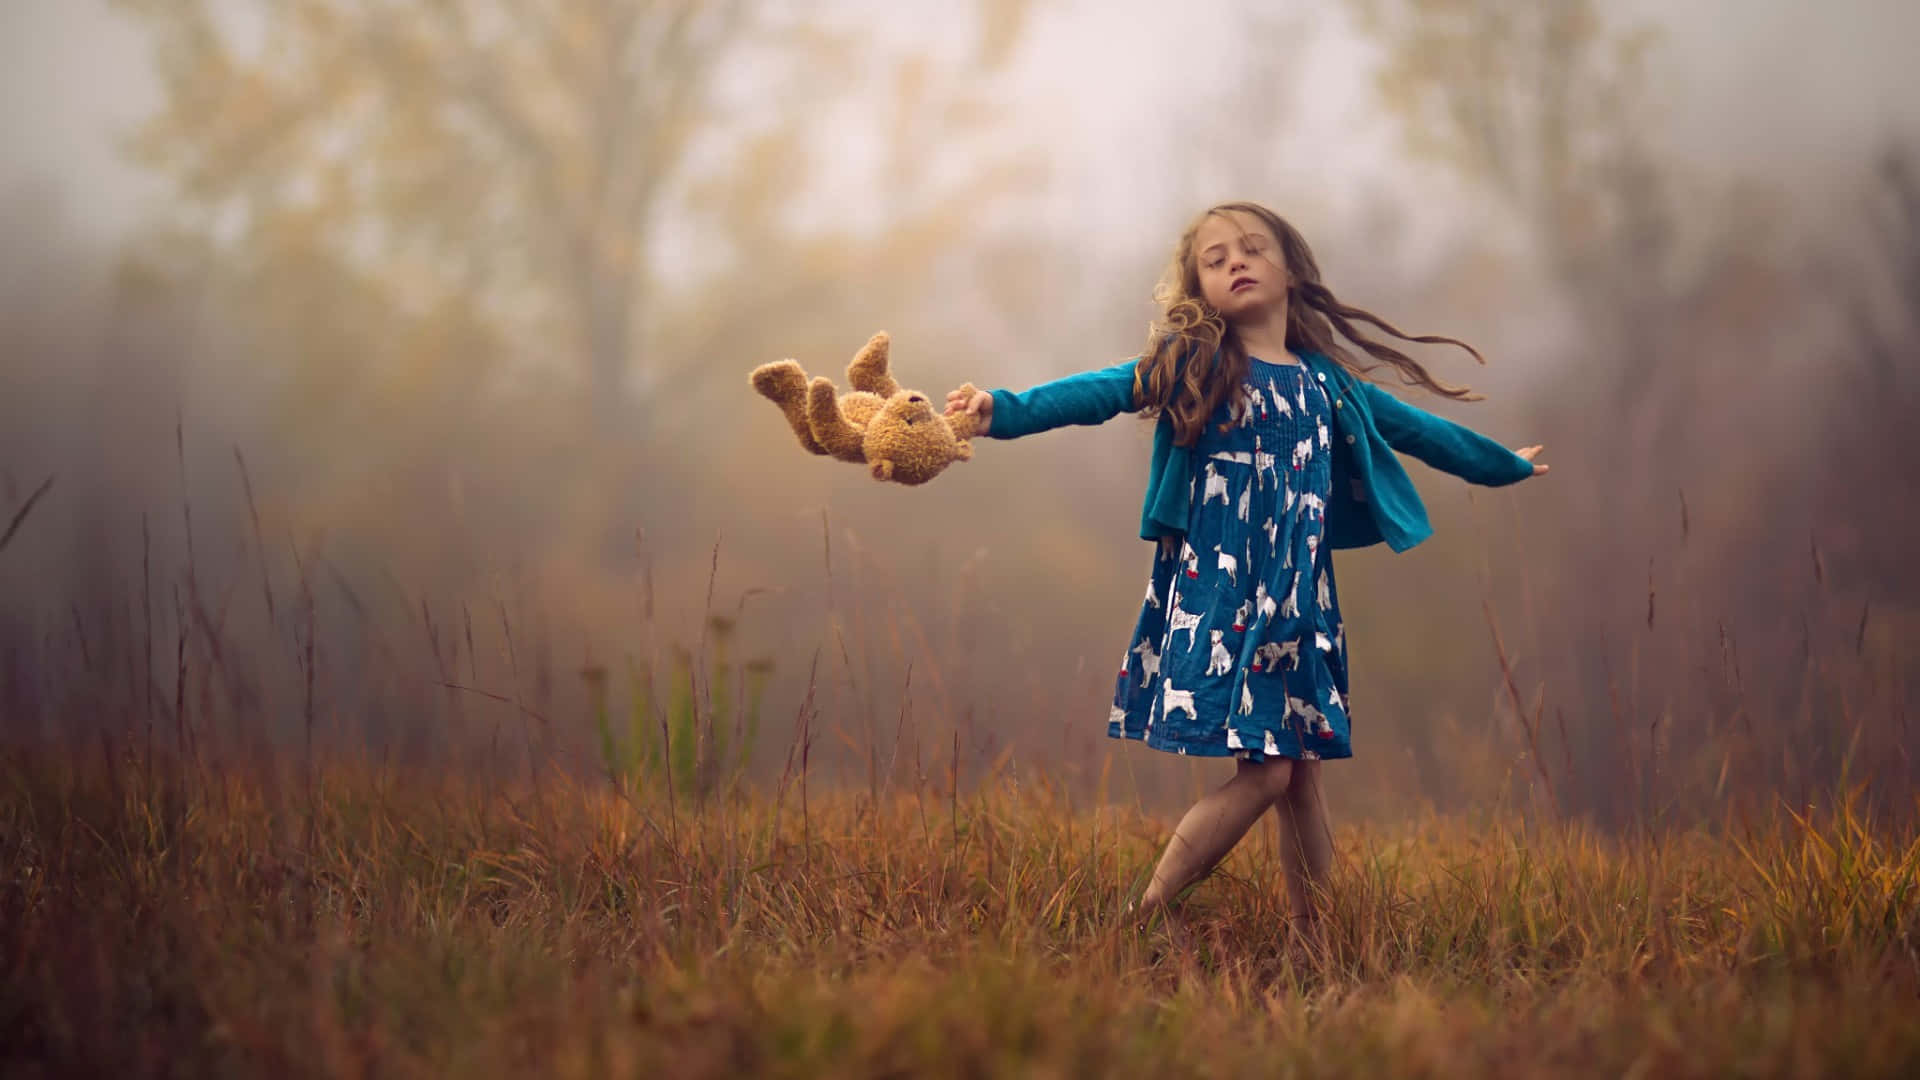 A Girl Is Holding A Teddy Bear In A Field